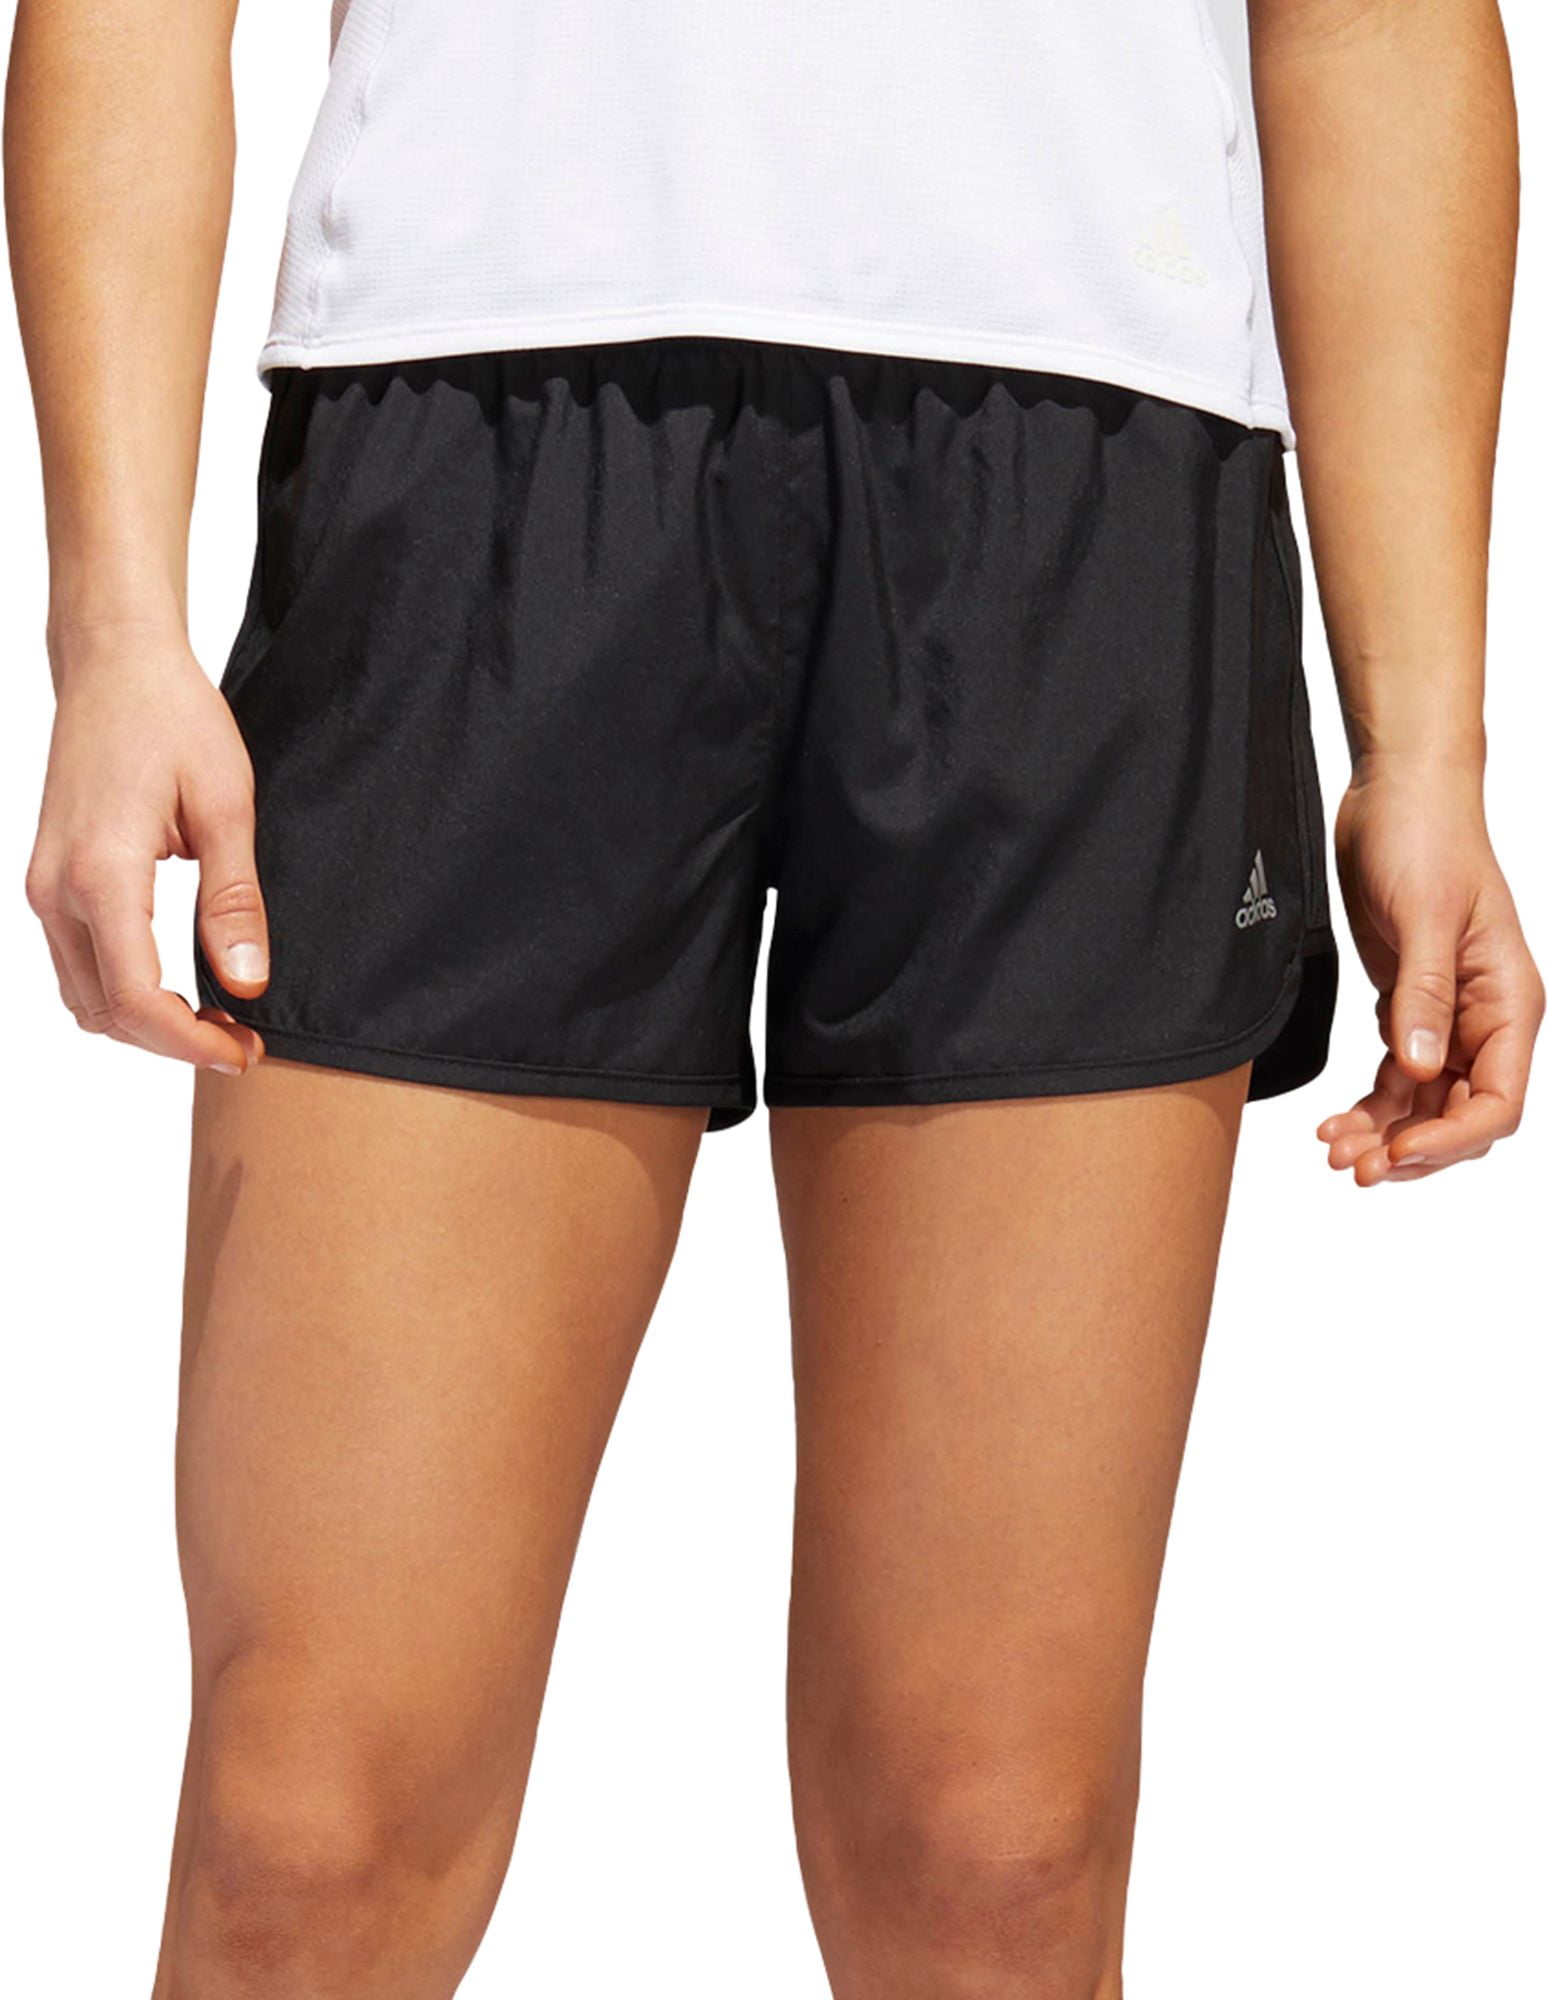 adidas women's marathon shorts